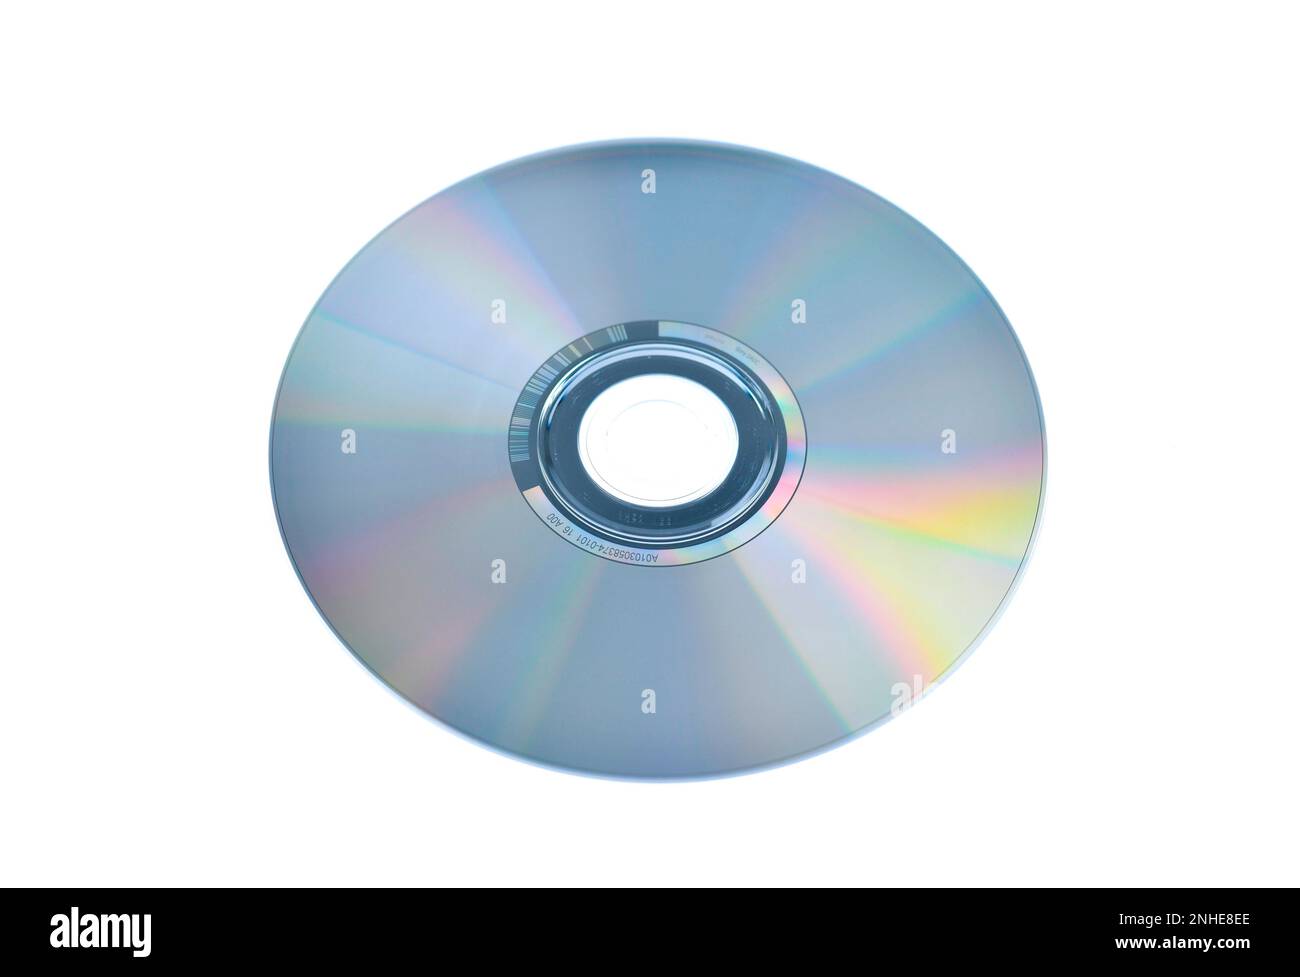 DVD - Acronimo di Digital Versatile Disc Disco Video Digitale Foto Stock